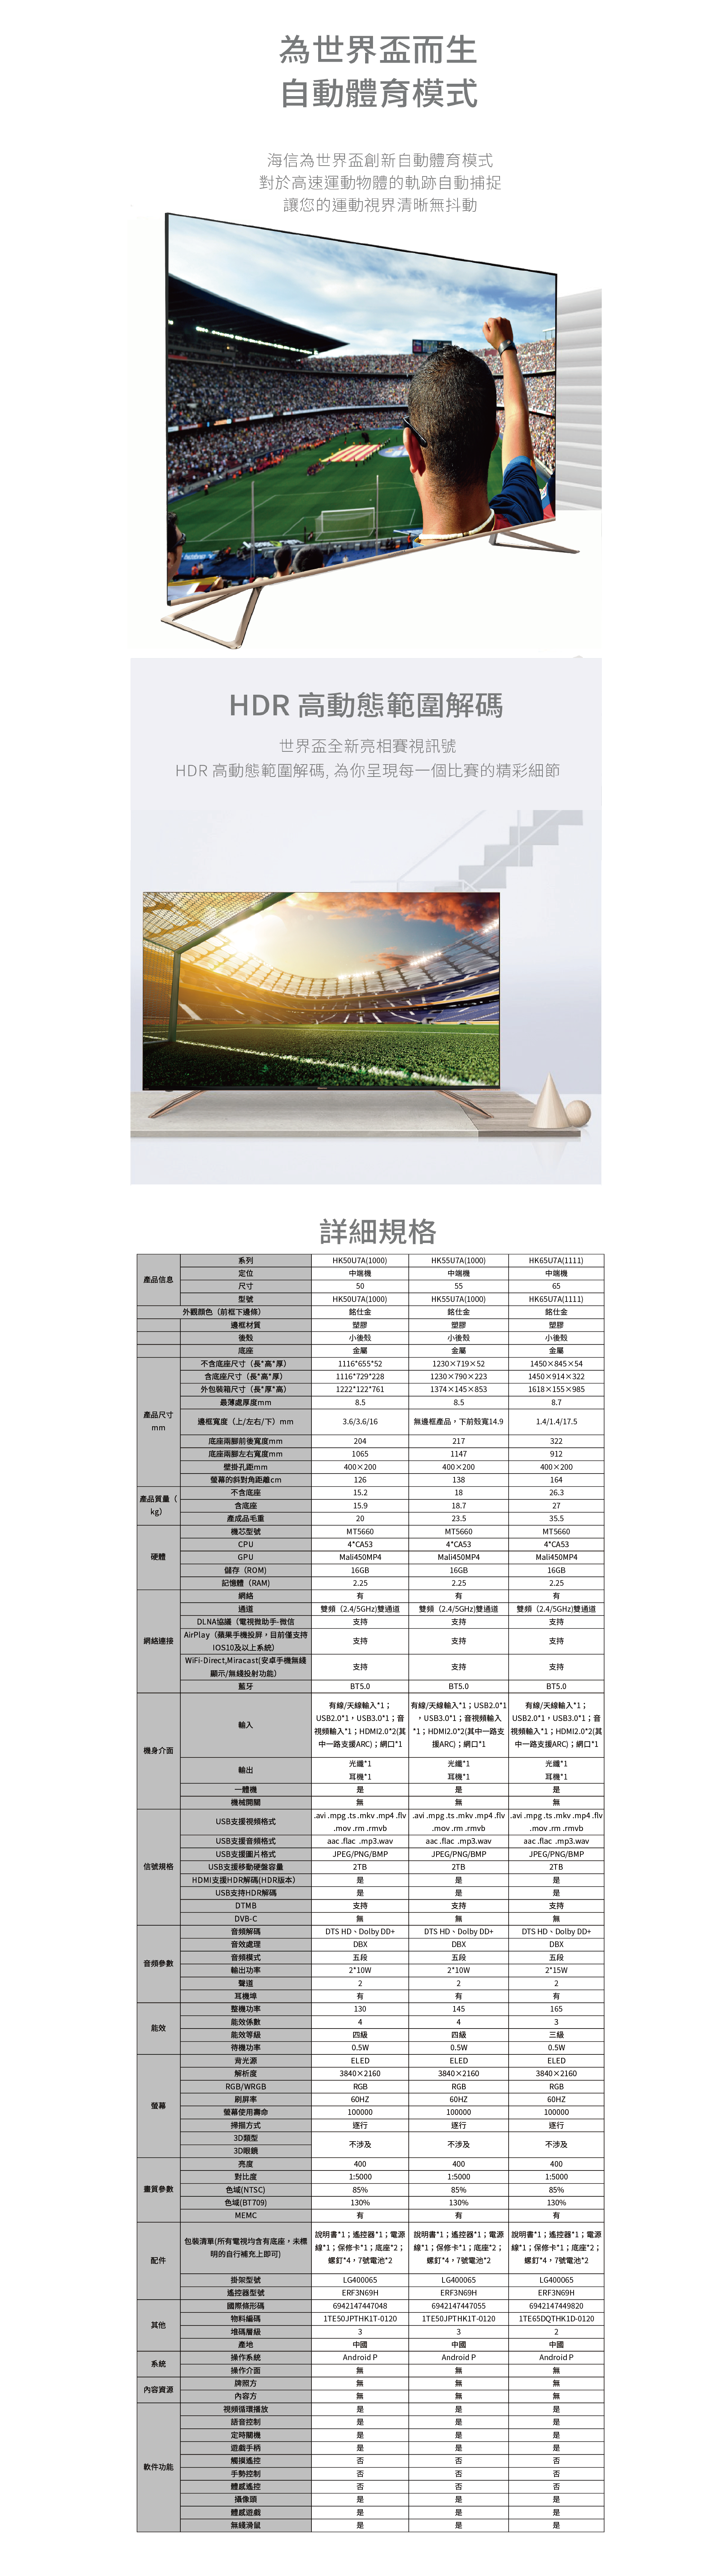 Hisense 海信 HK55U7A(1000) 55吋 4K ULED 超高清智能電視 U7A (含Google Play)